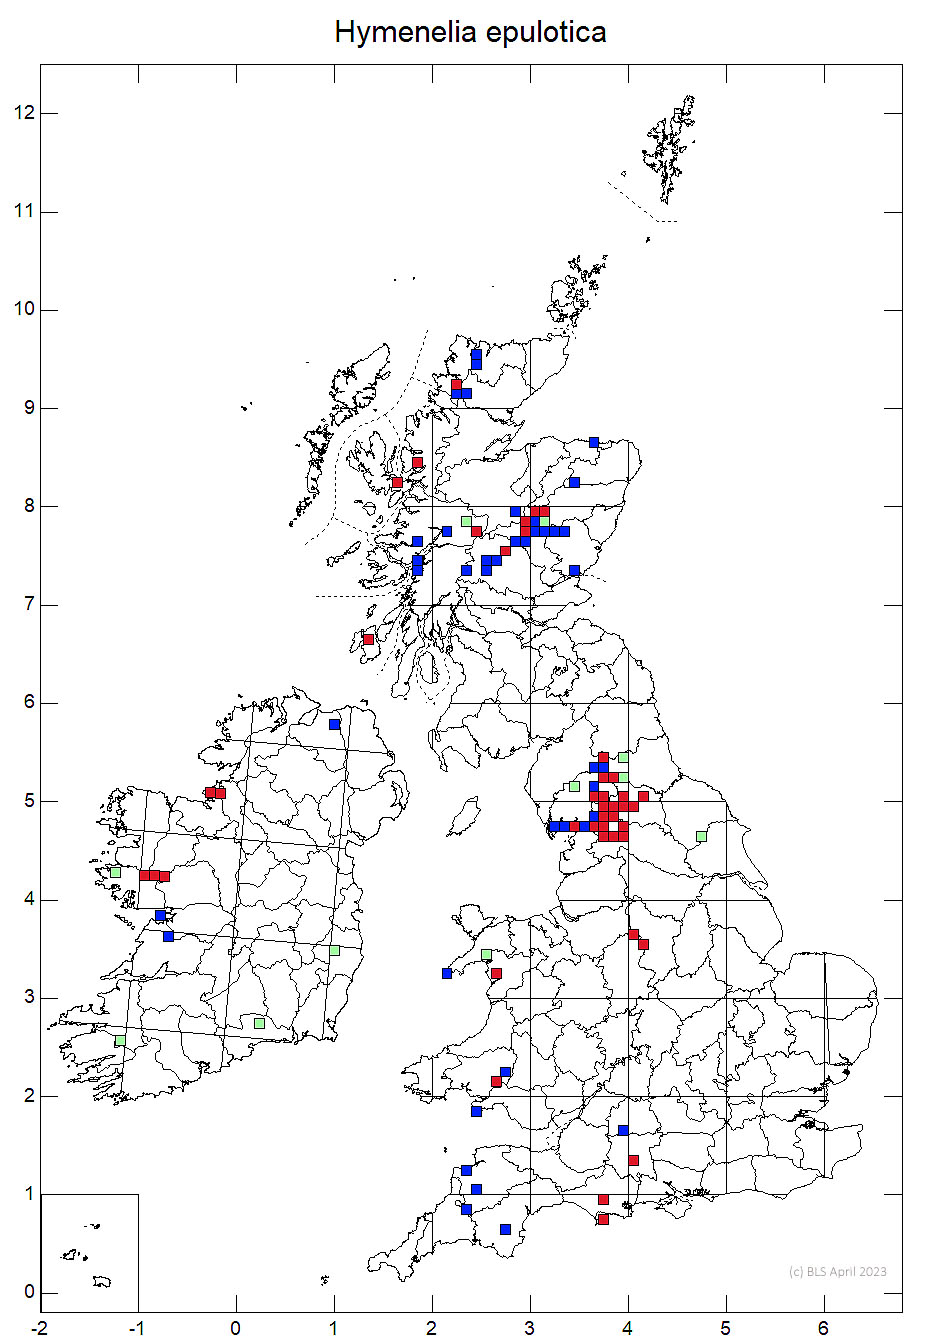 Hymenelia epulotica 10km sq distribution map